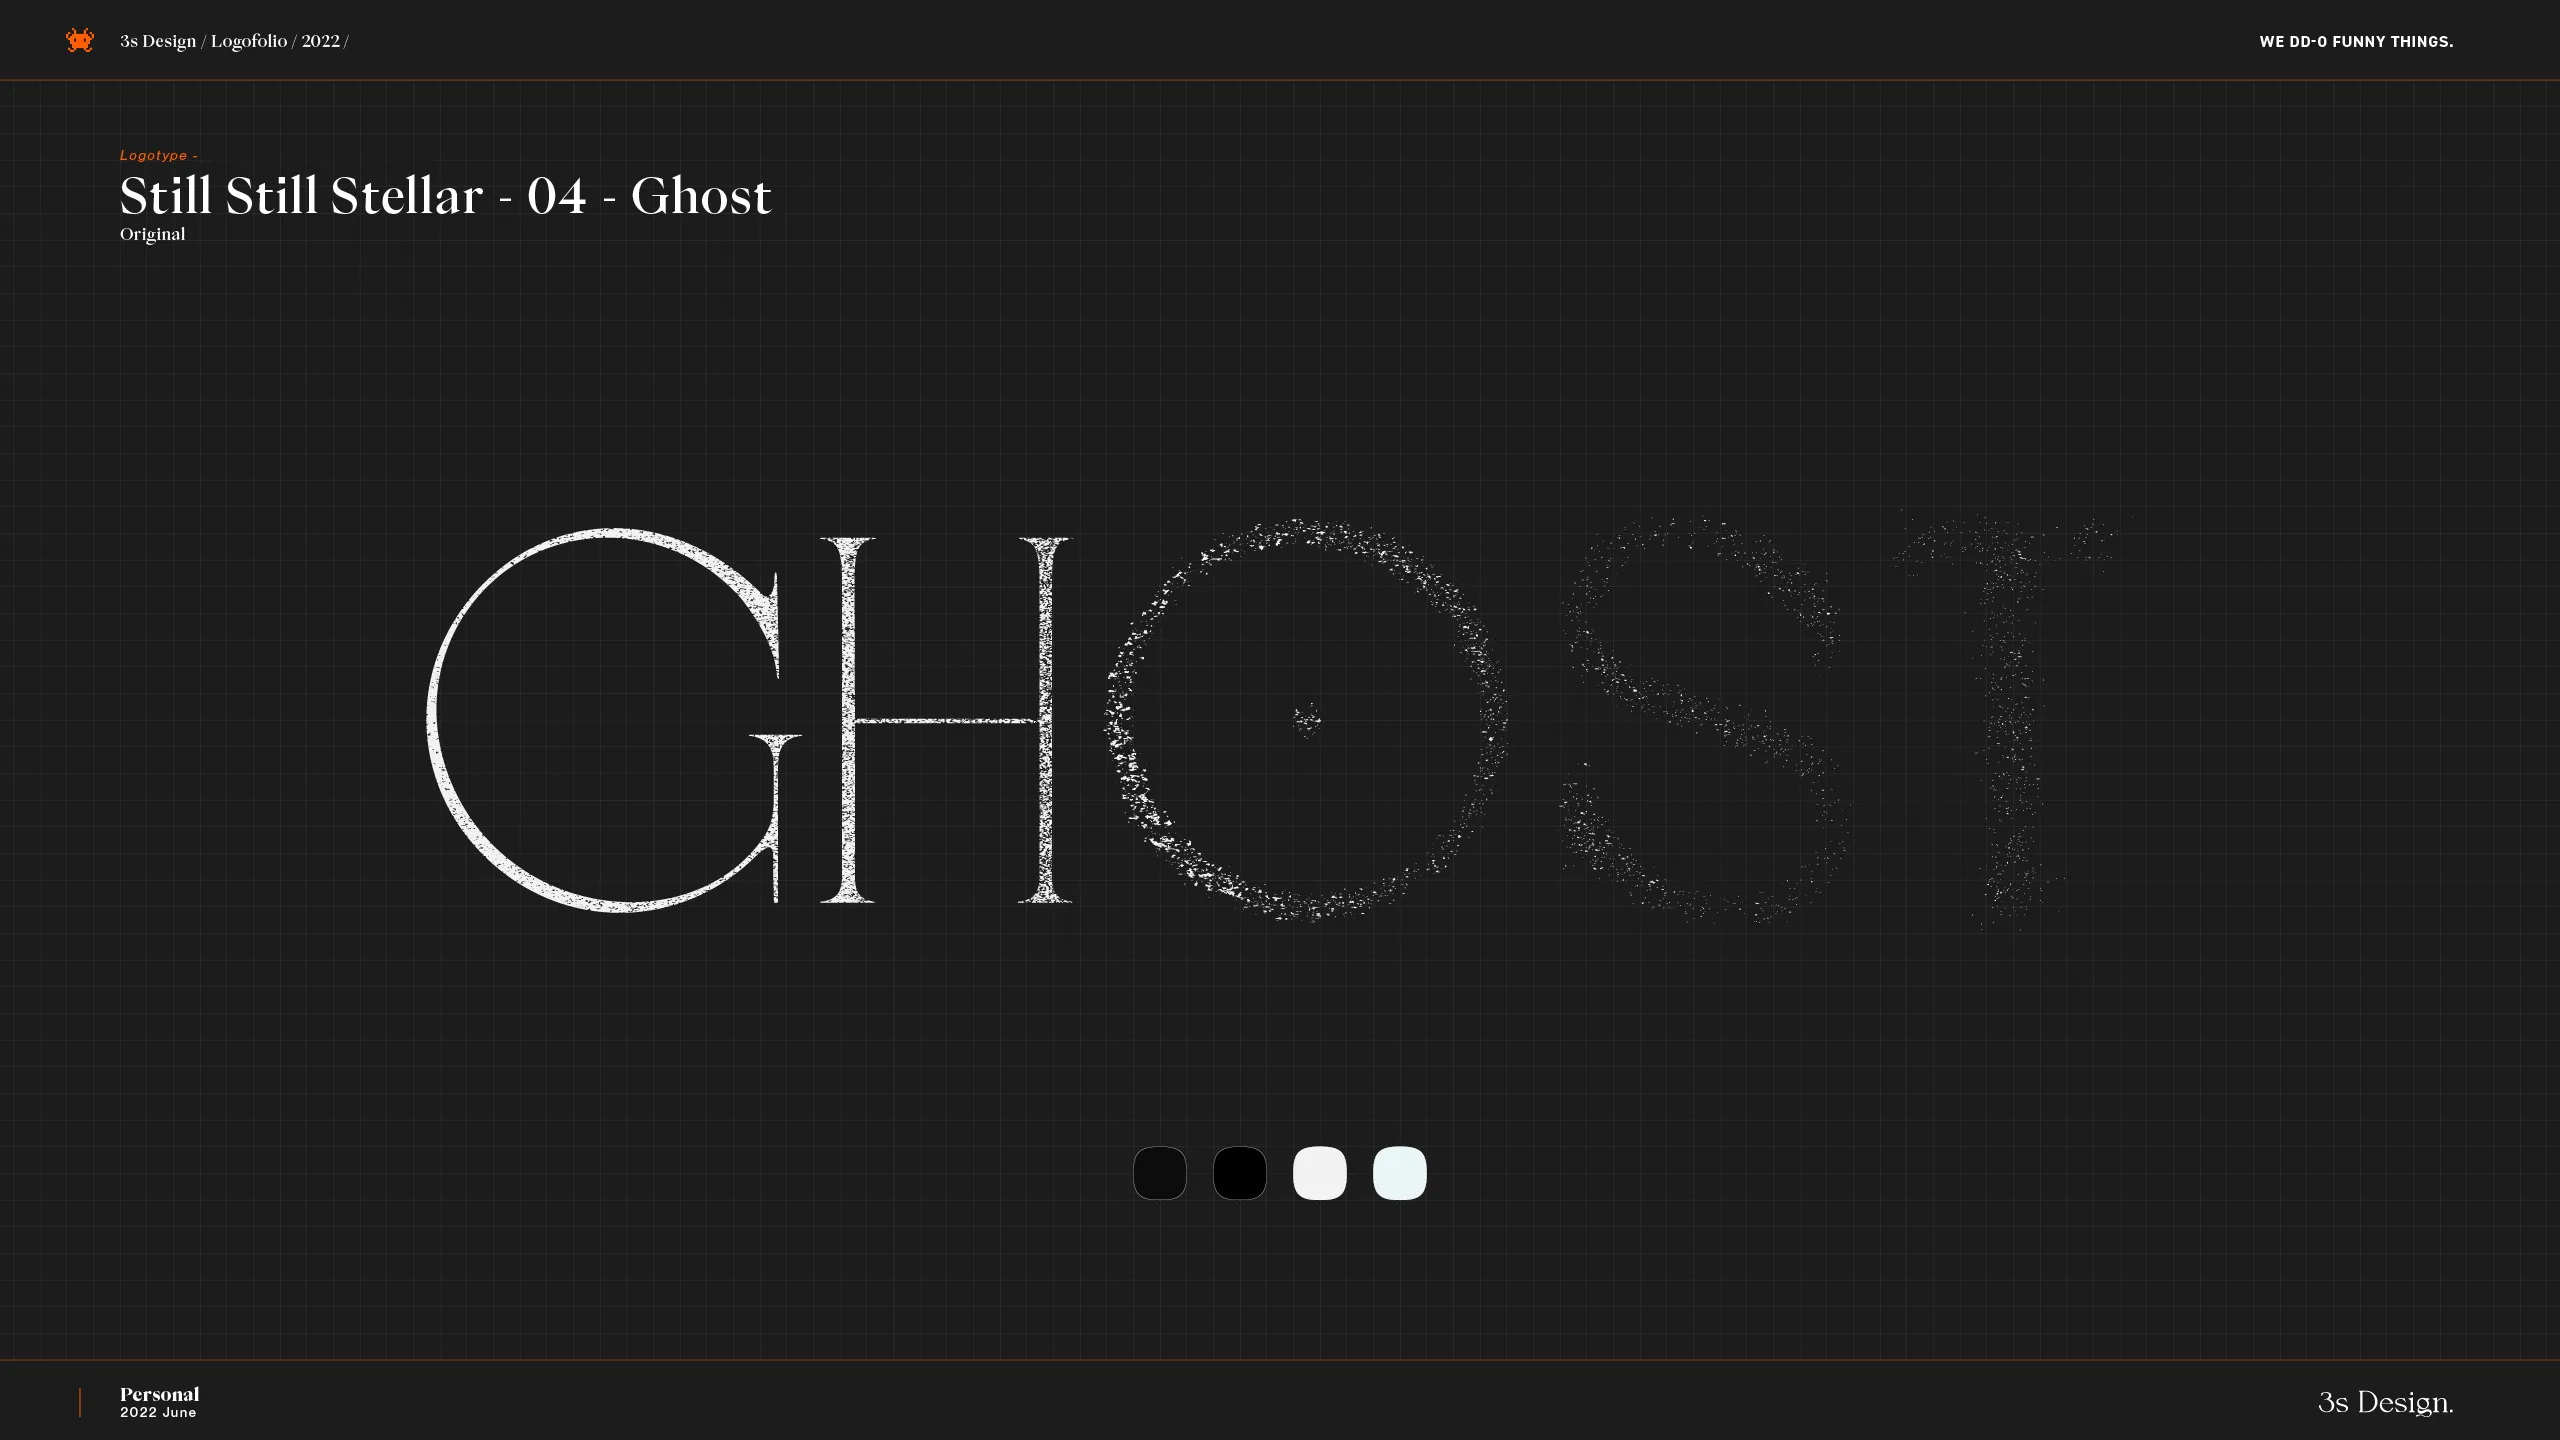 3s-Design-Logofolio-2022-v1.3_SSS-04-Ghost_2560x